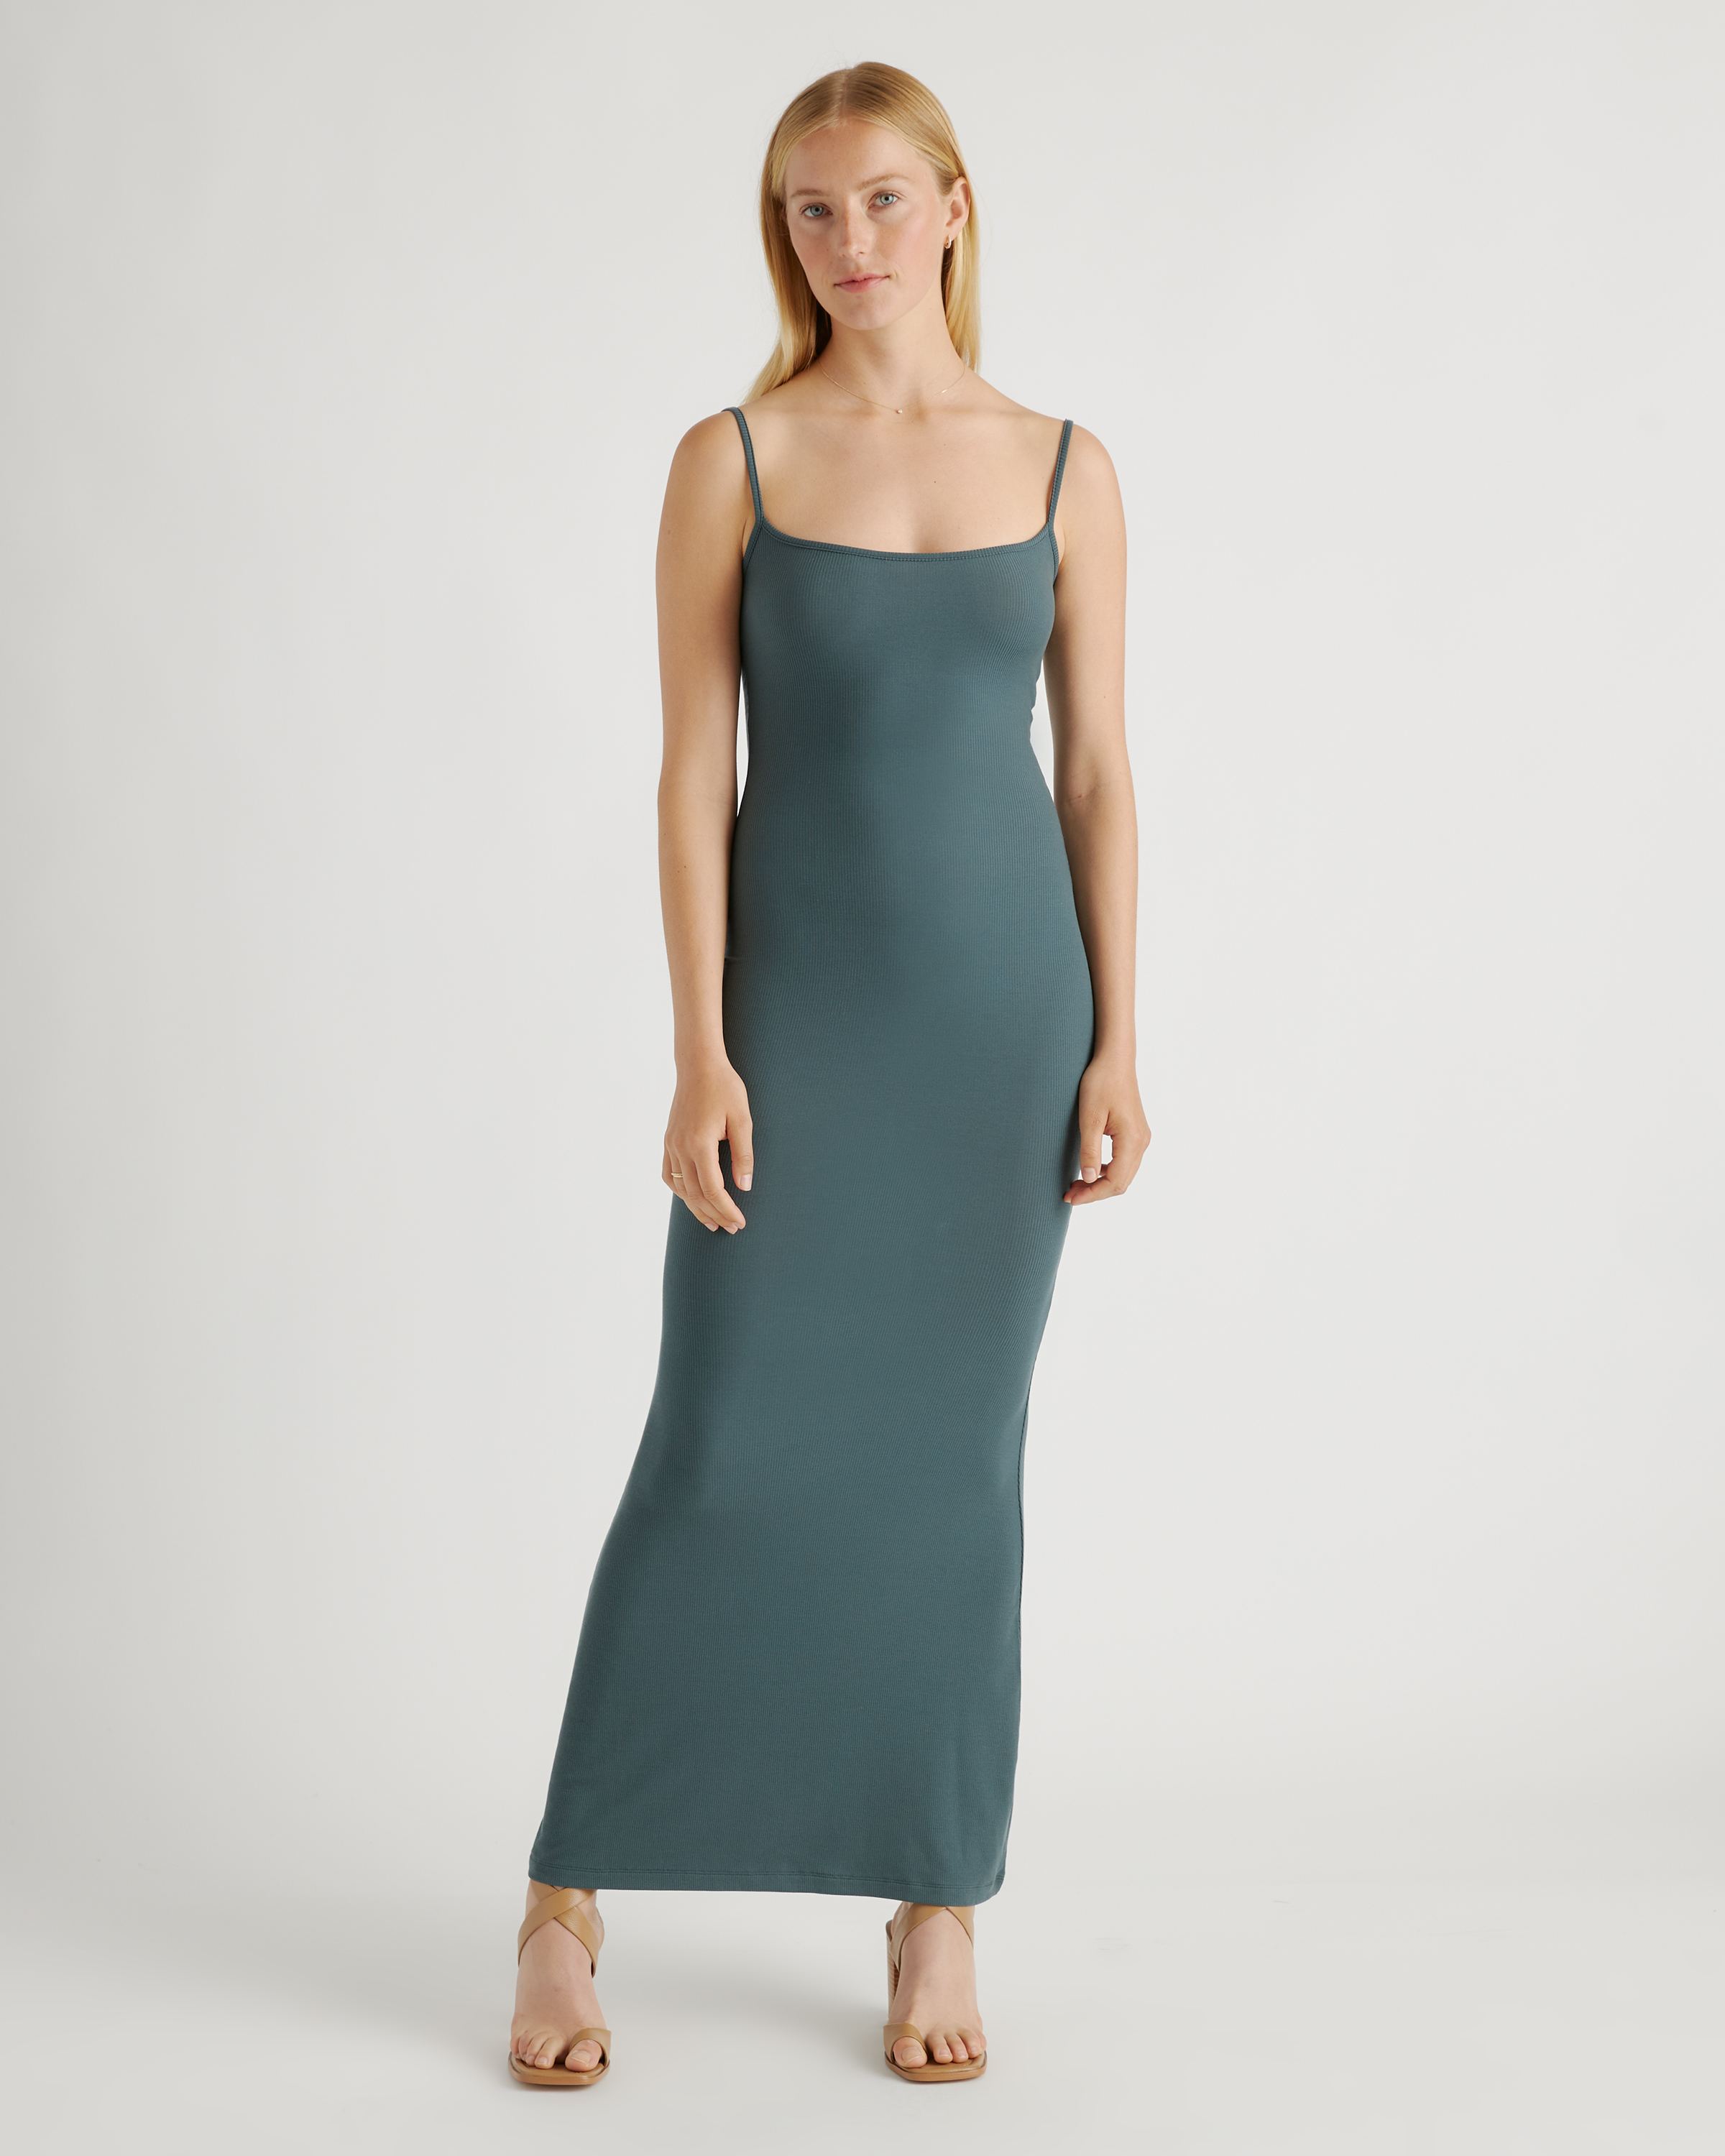 Plus Size Dress, Eternity Maxi Convertible Dress